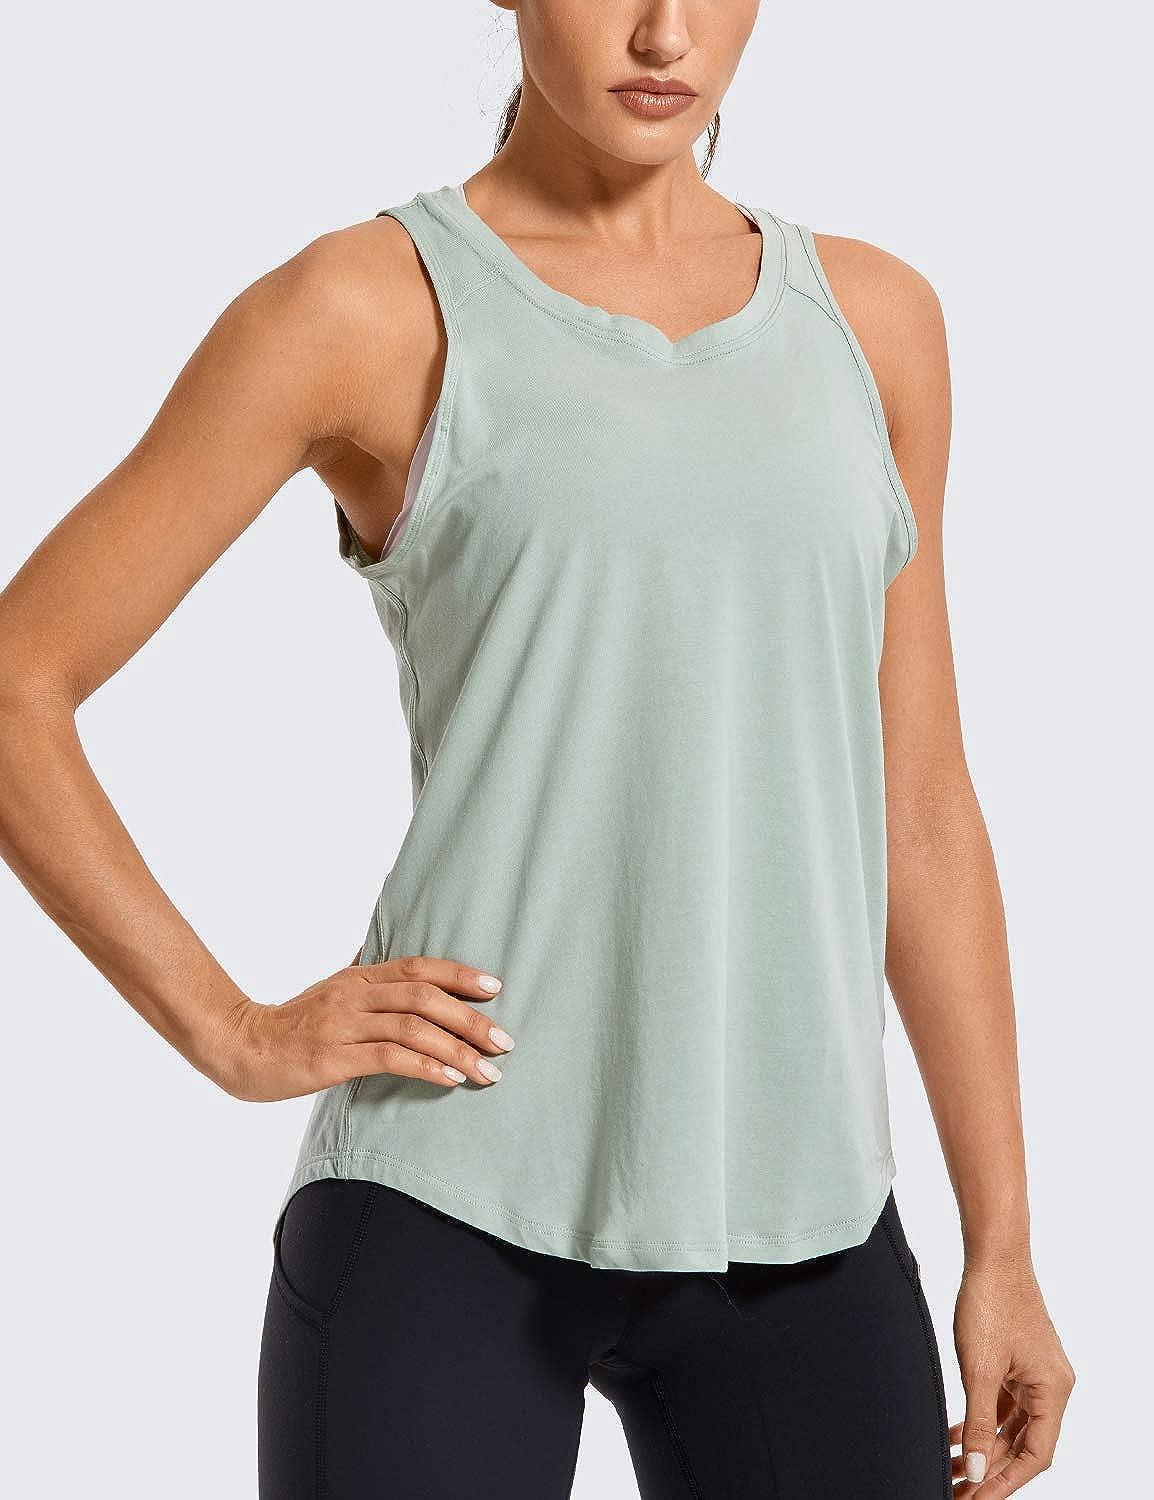 CRZ YOGA Women's Pima Cotton Workout Tank Tops Tie Back Sleeveless Shirts  Yoga Athletic Open Back Sport Gym Tops Large Jade Grey